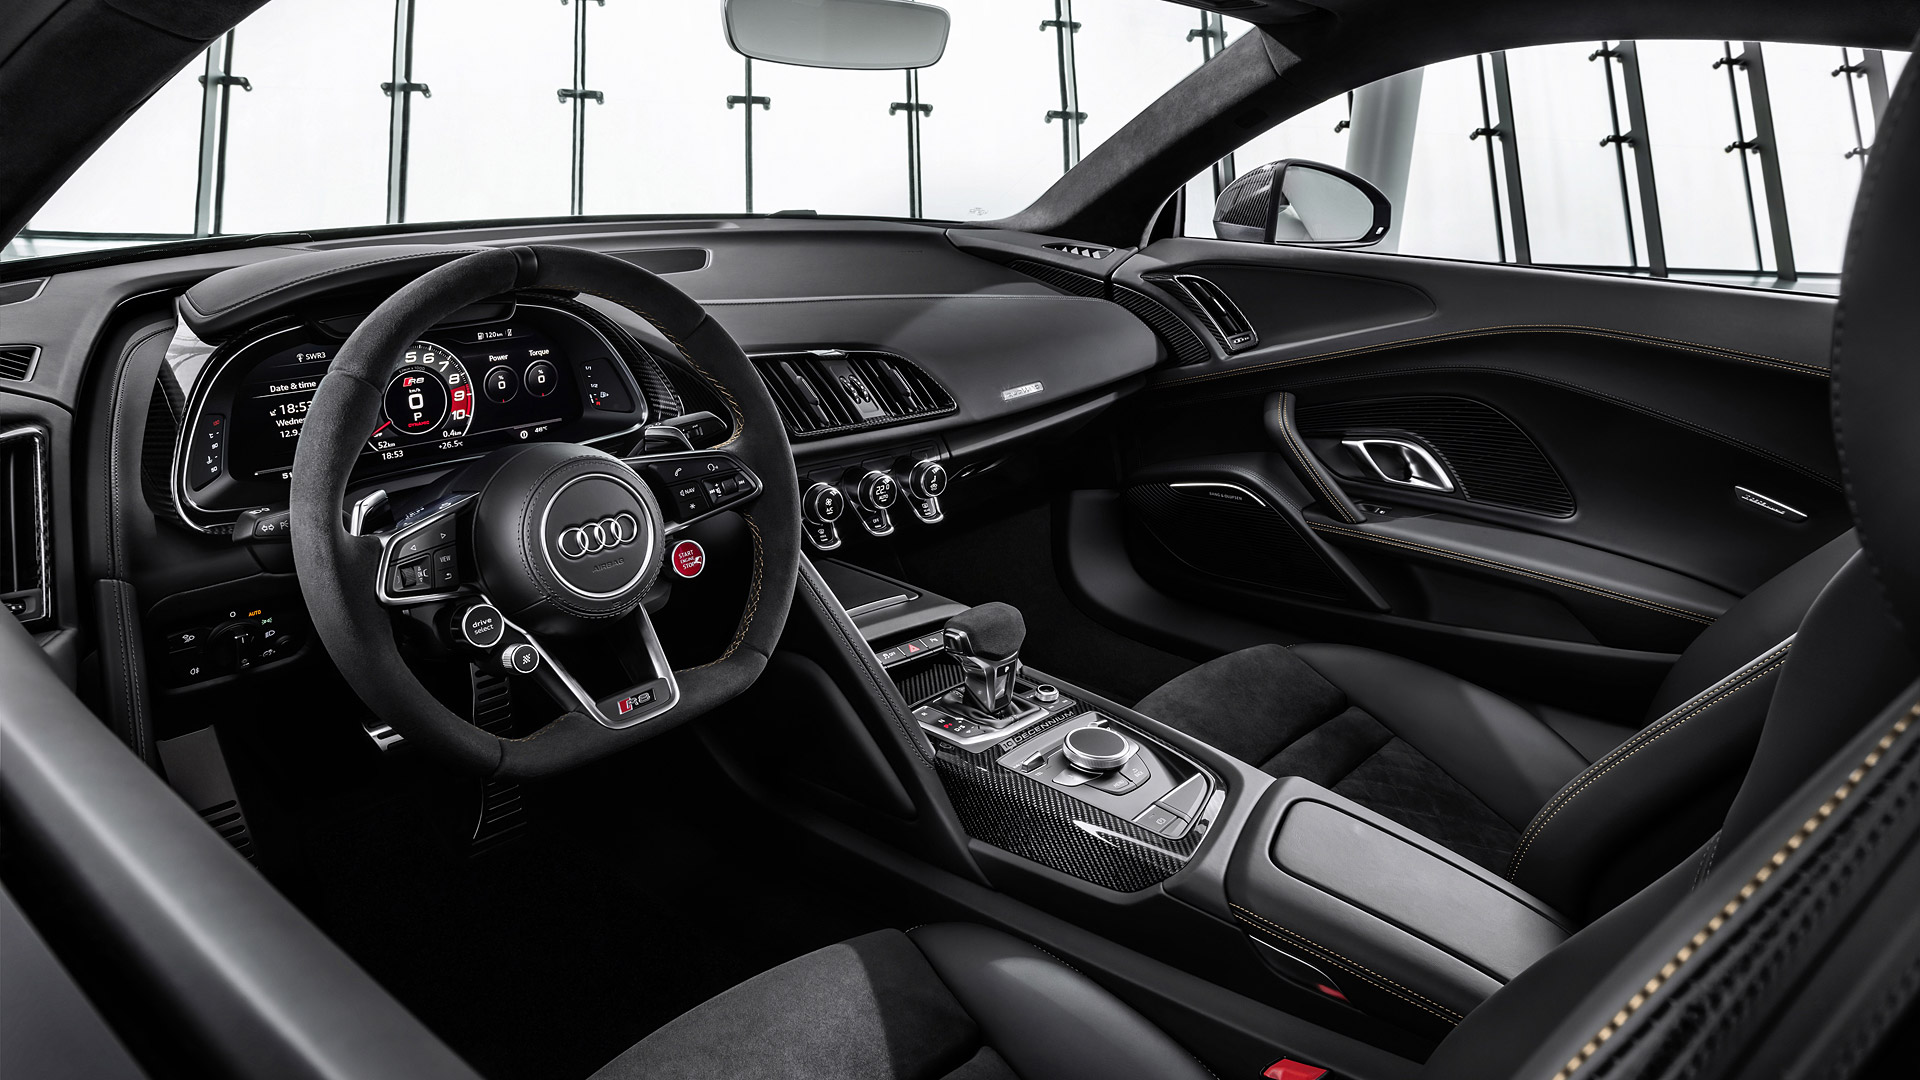 2019 Audi R8 V10 Decennium Picture - R8 V 10 Decennium , HD Wallpaper & Backgrounds